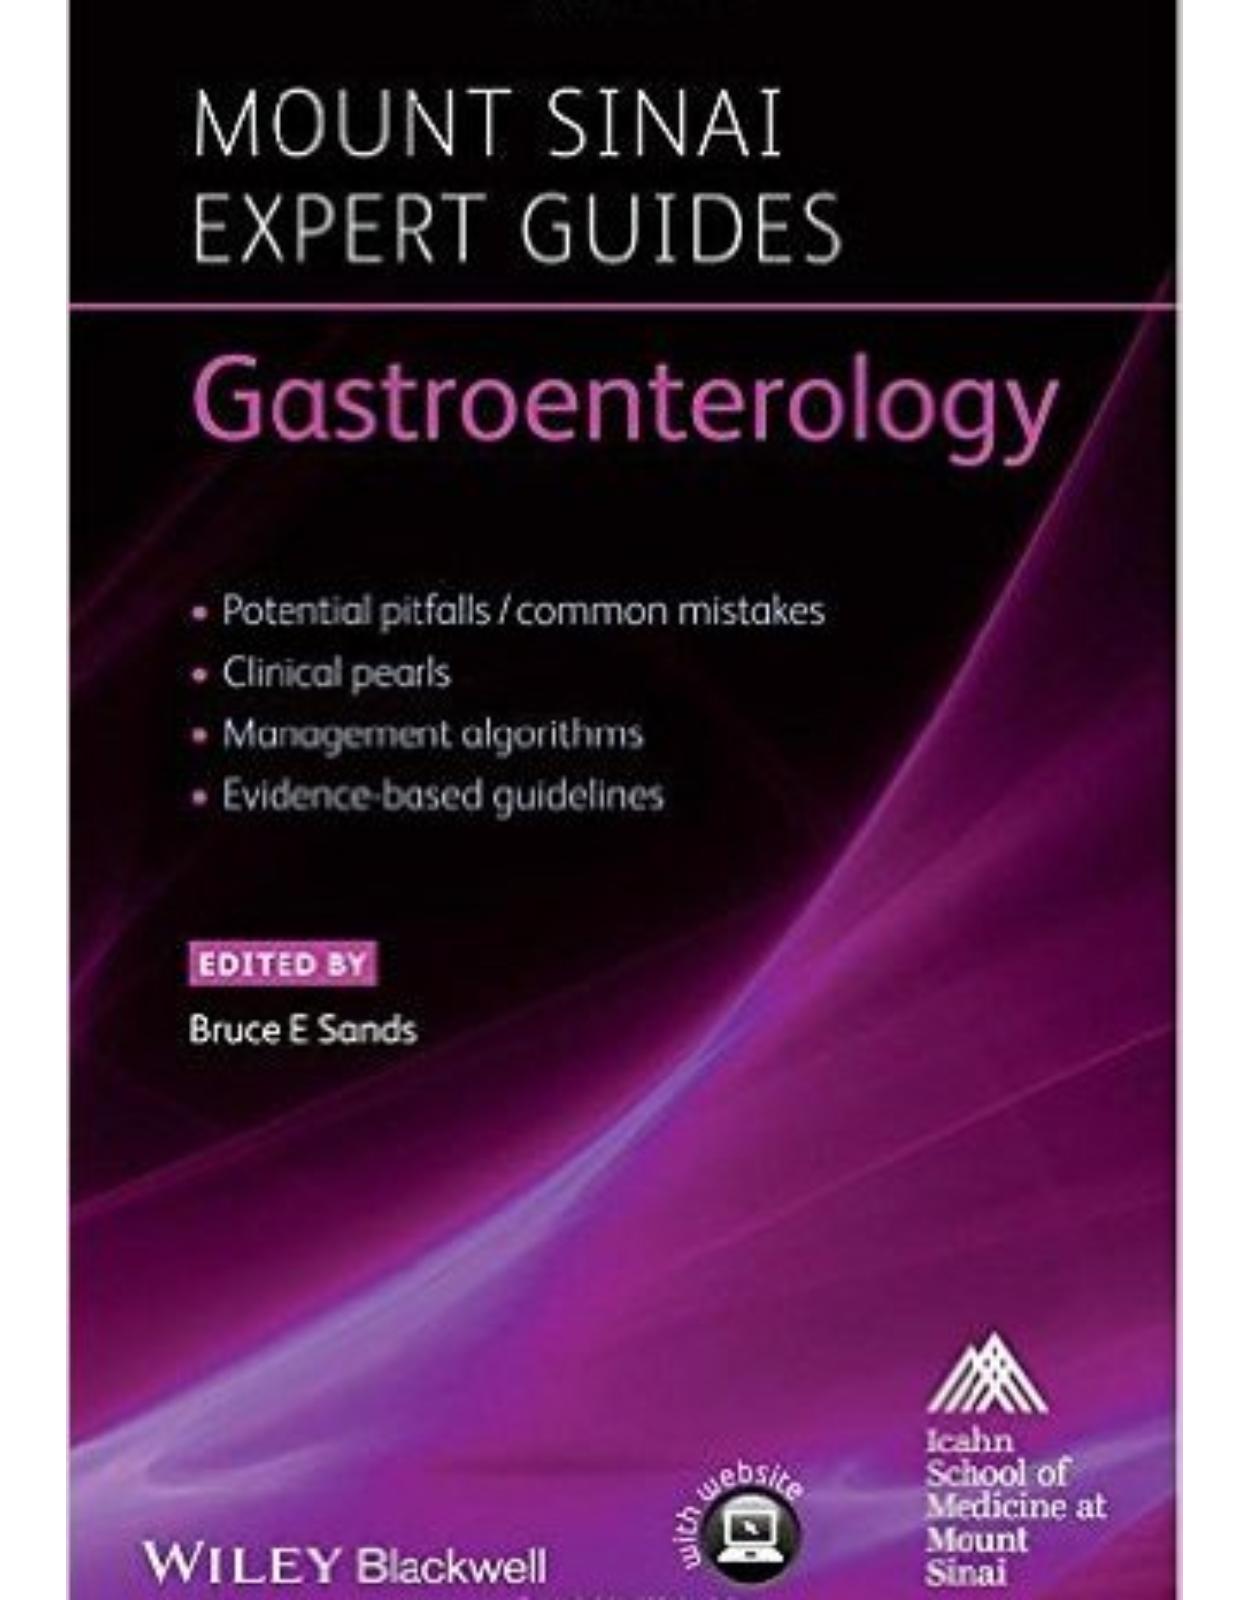 Mount Sinai Expert Guides: Gastroenterology 1st Edition